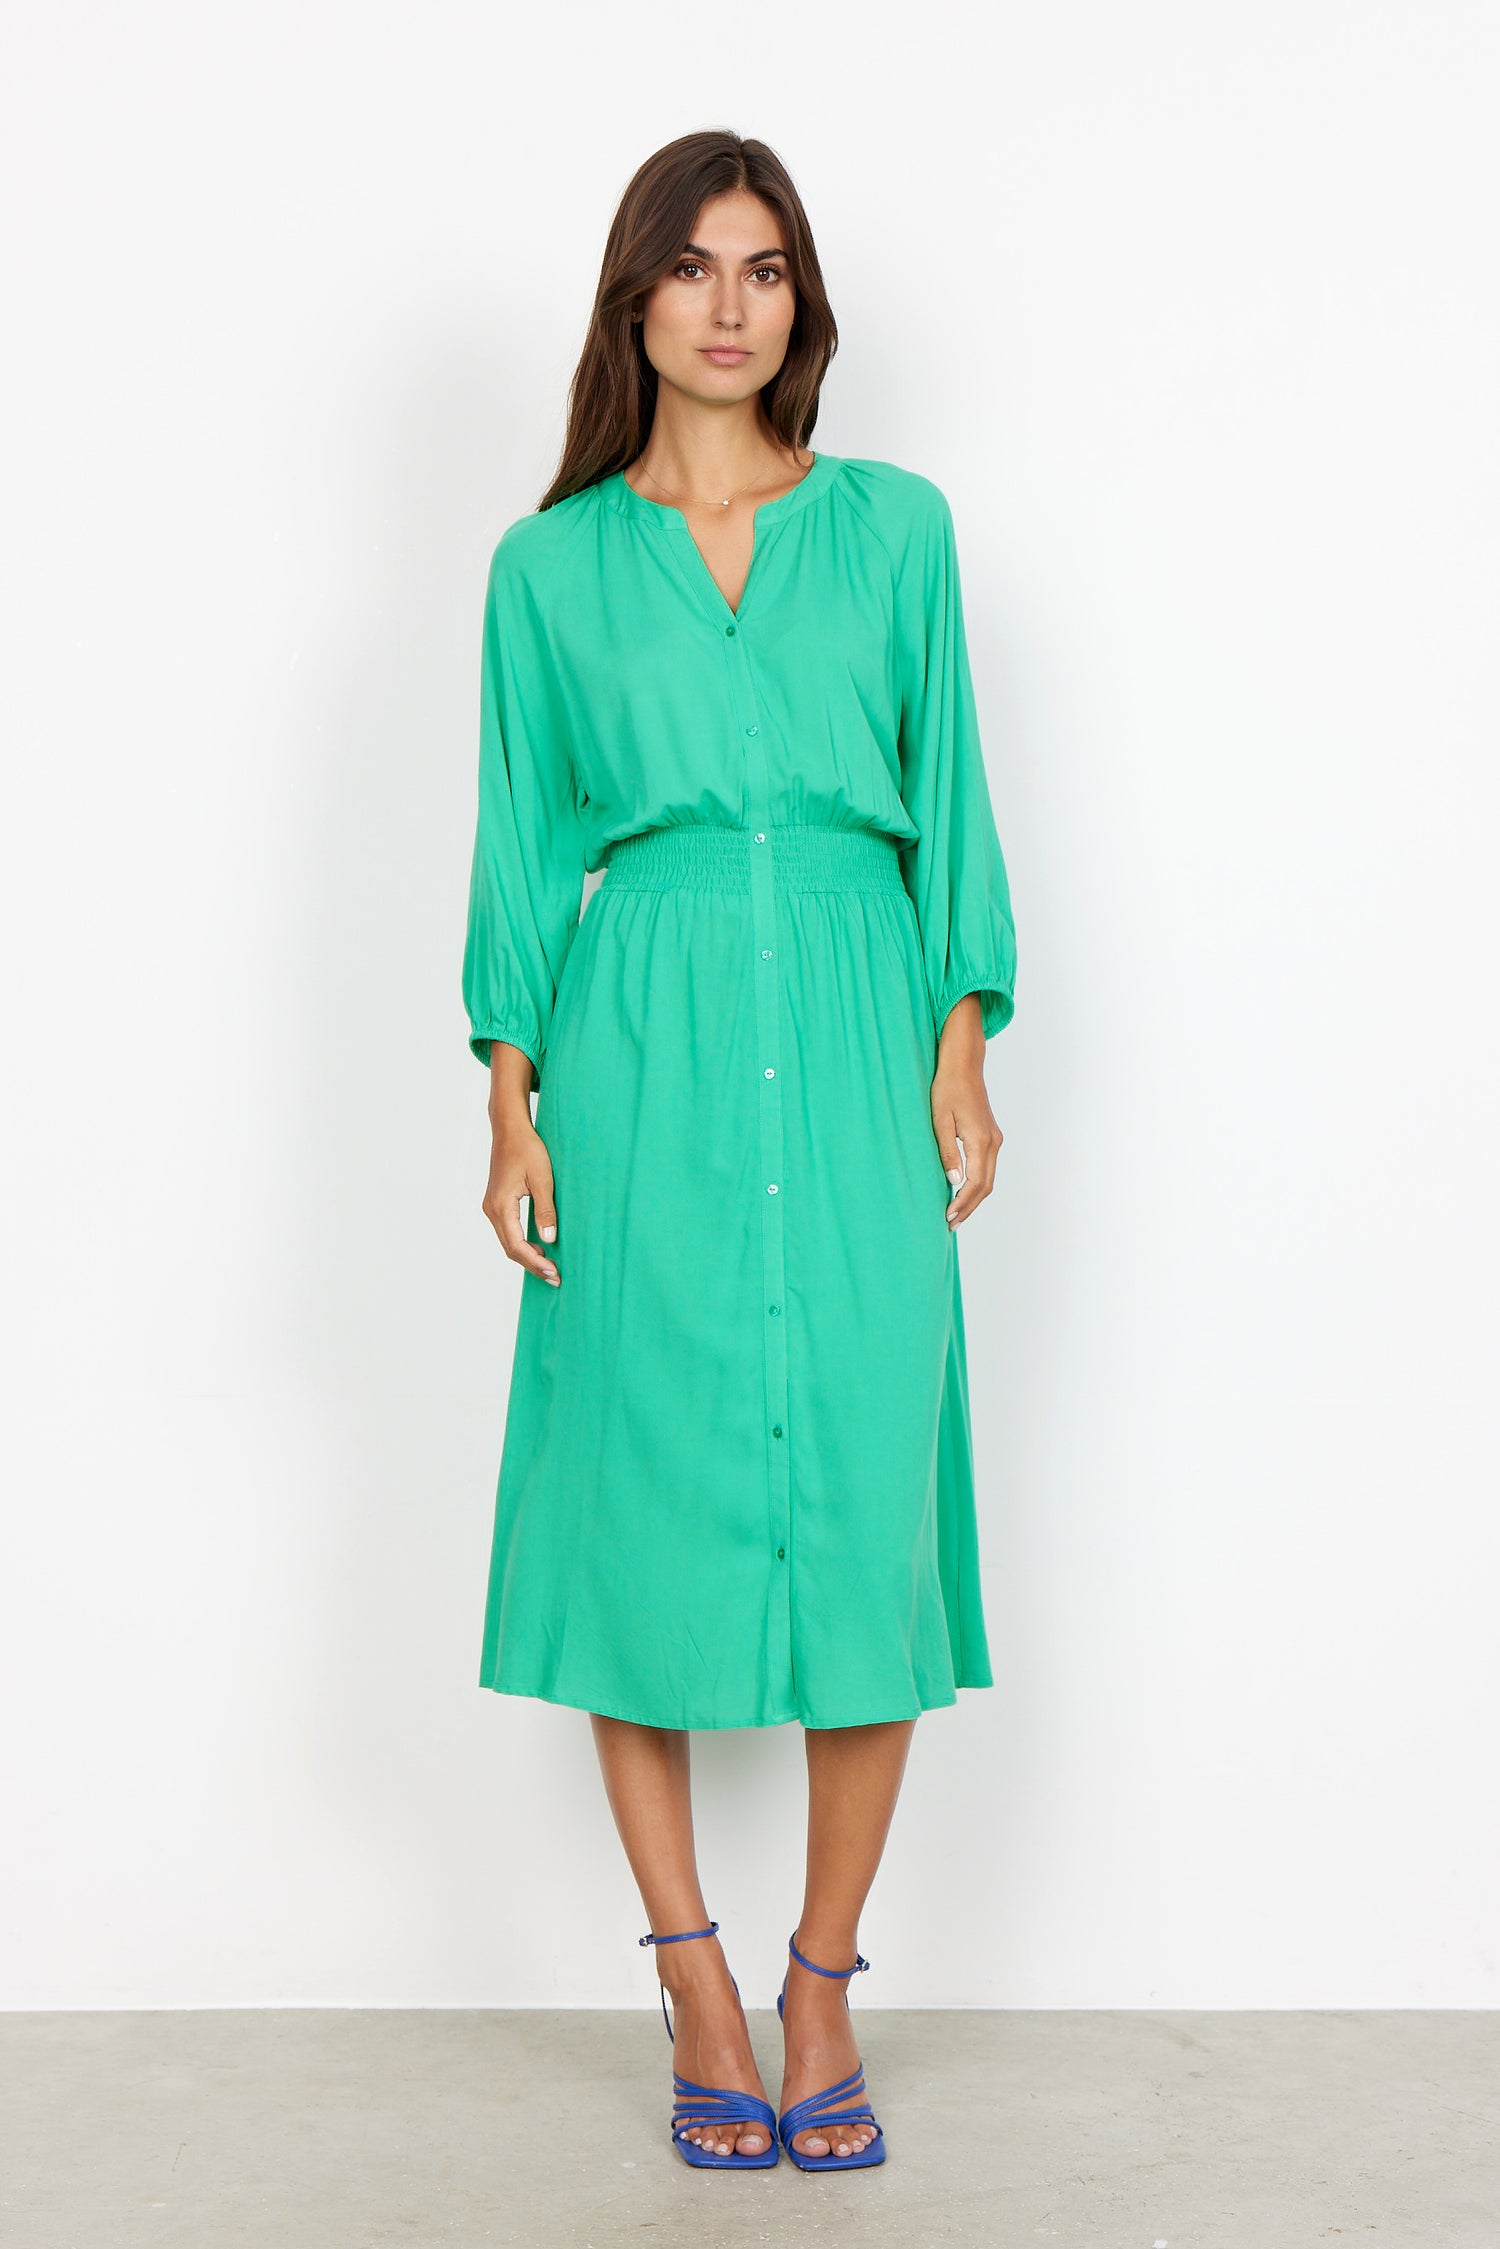 Stunning green Soya Concept dress